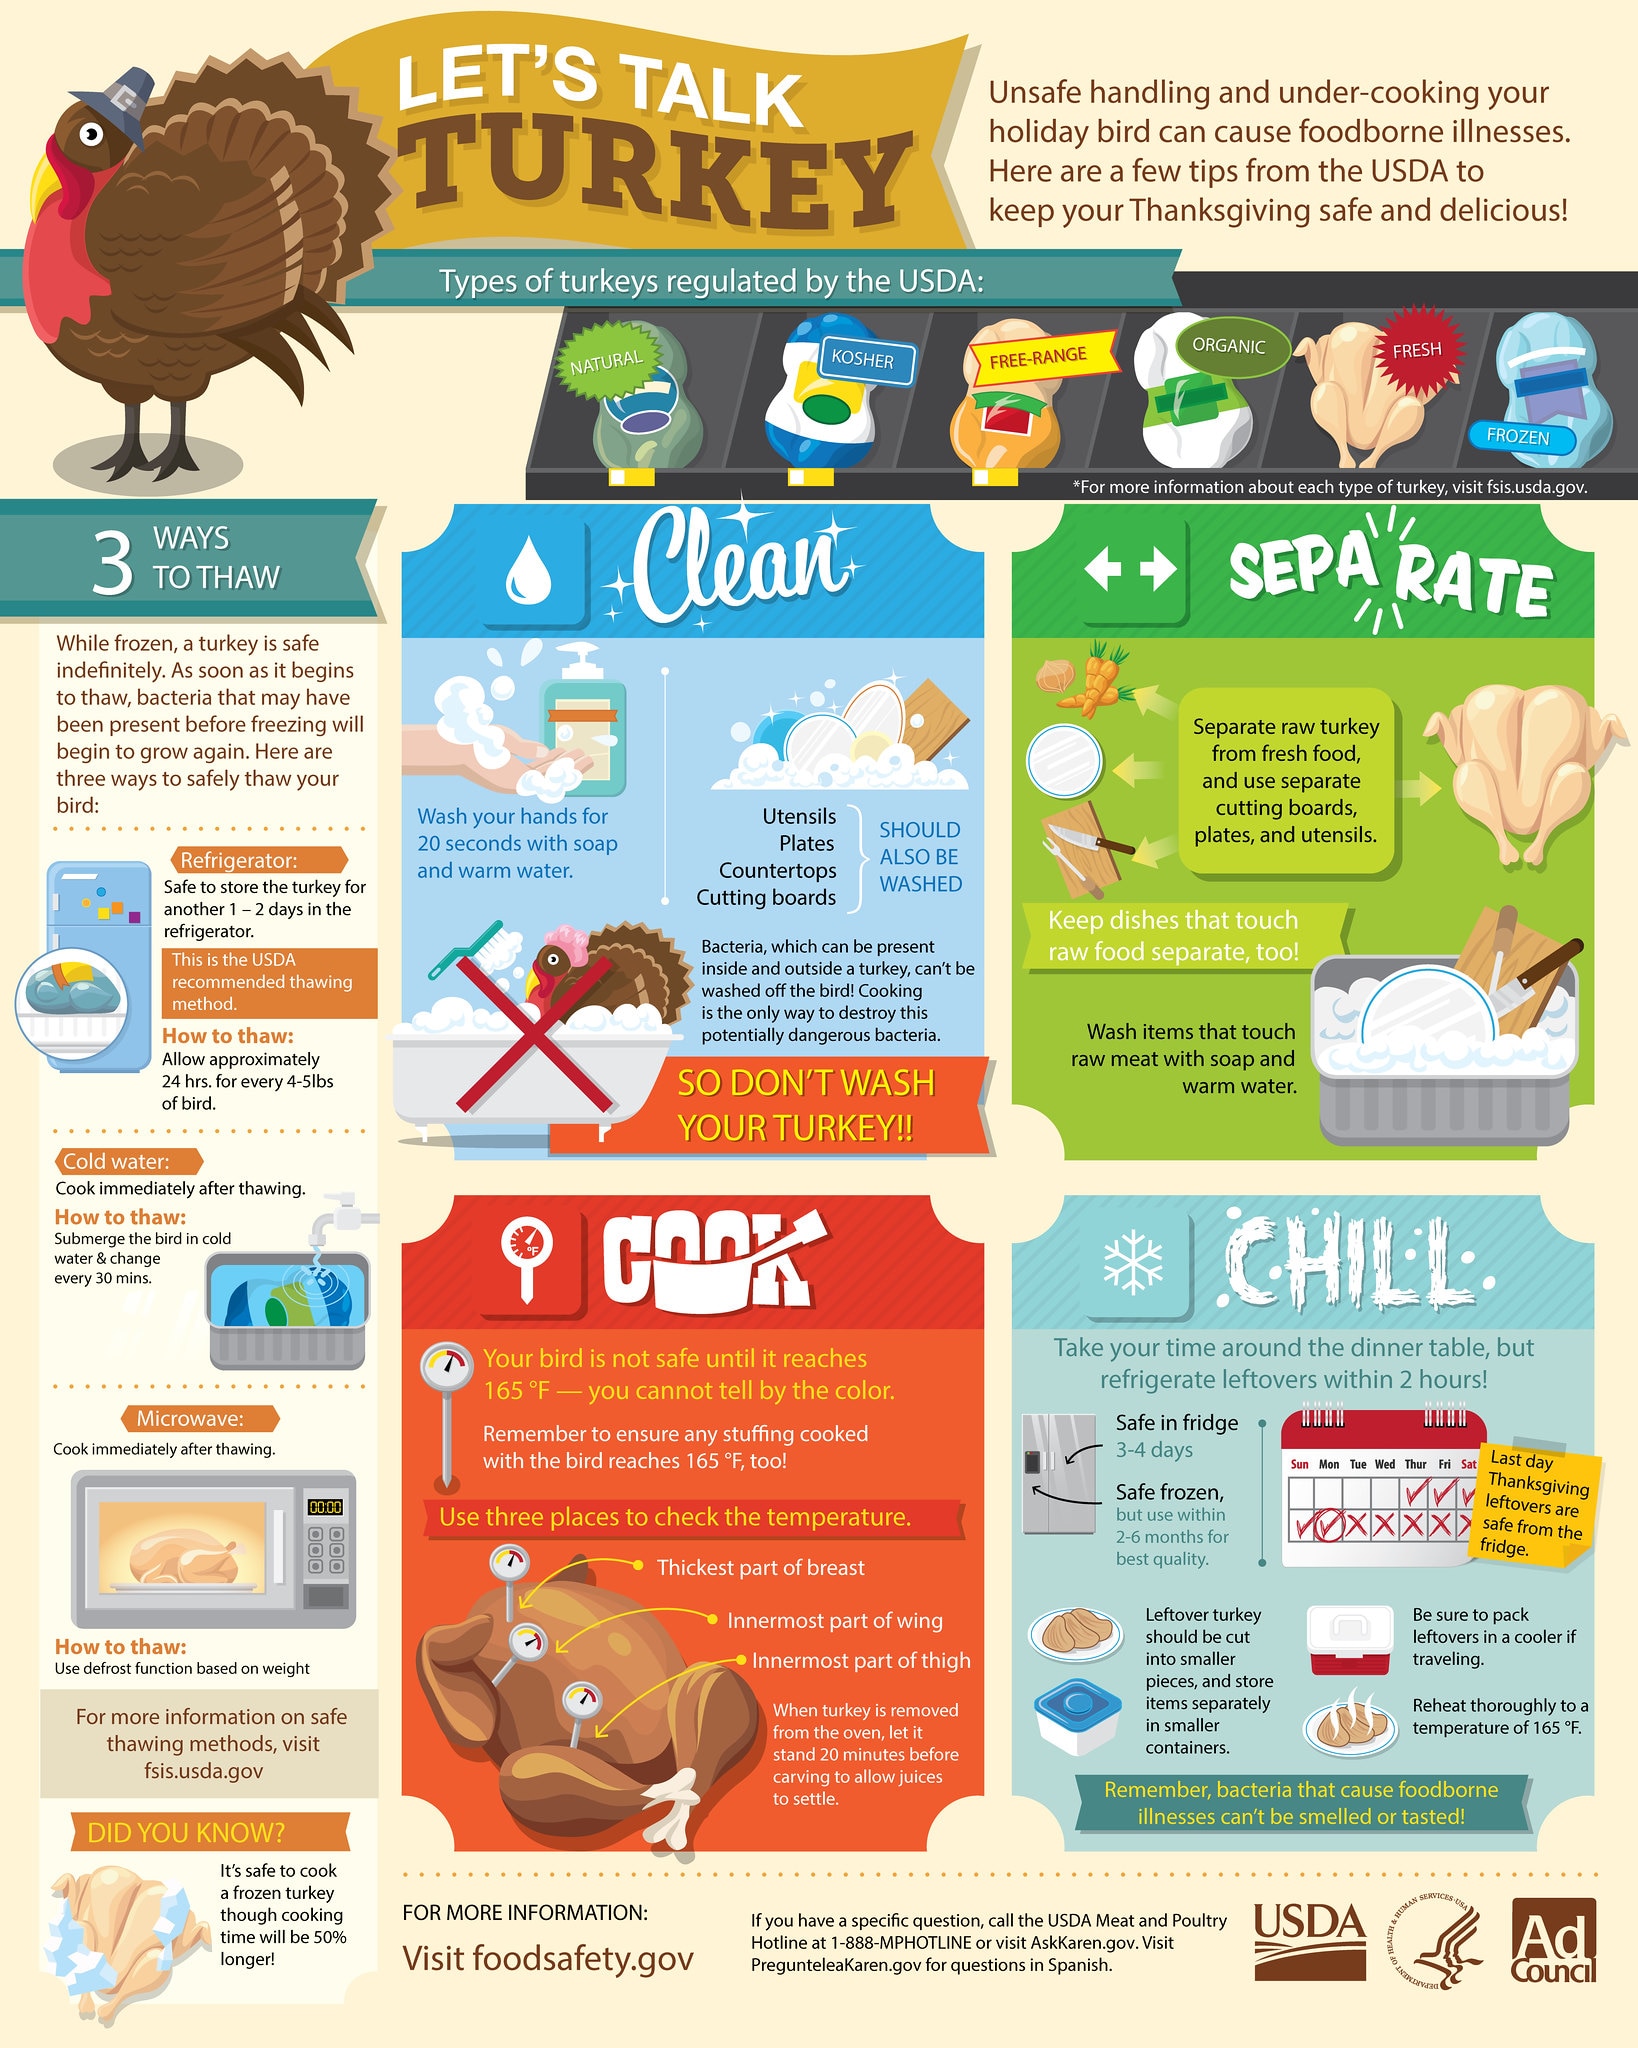 https://www.foodsafety.gov/sites/default/files/2019-05/thanksgiving-turkey-food-safety-infographic.jpg